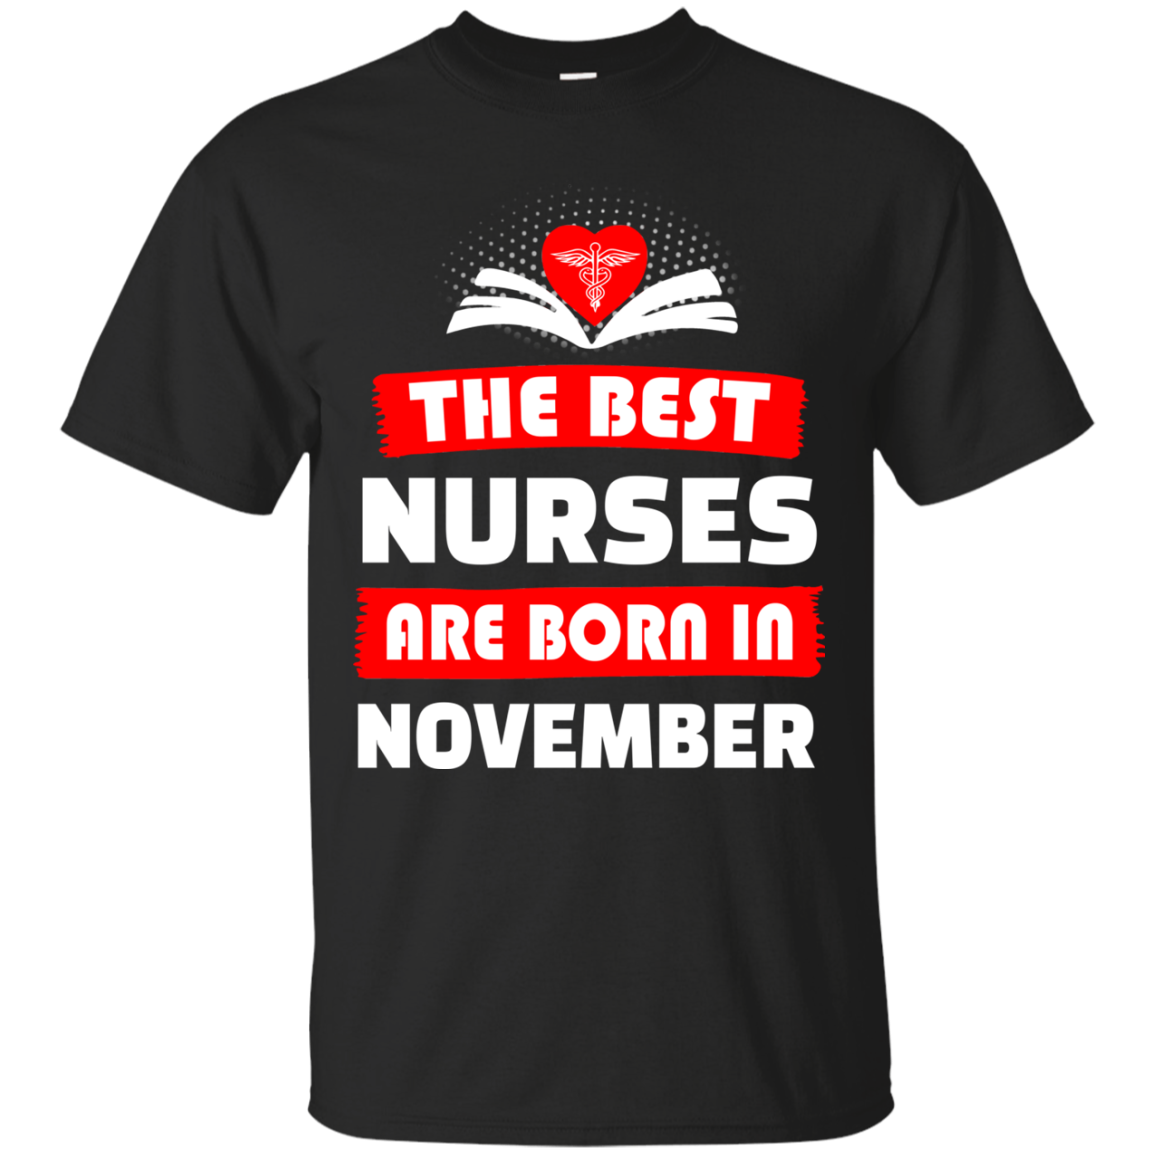 The best Nurses are born in November shirt, hoodie, tank